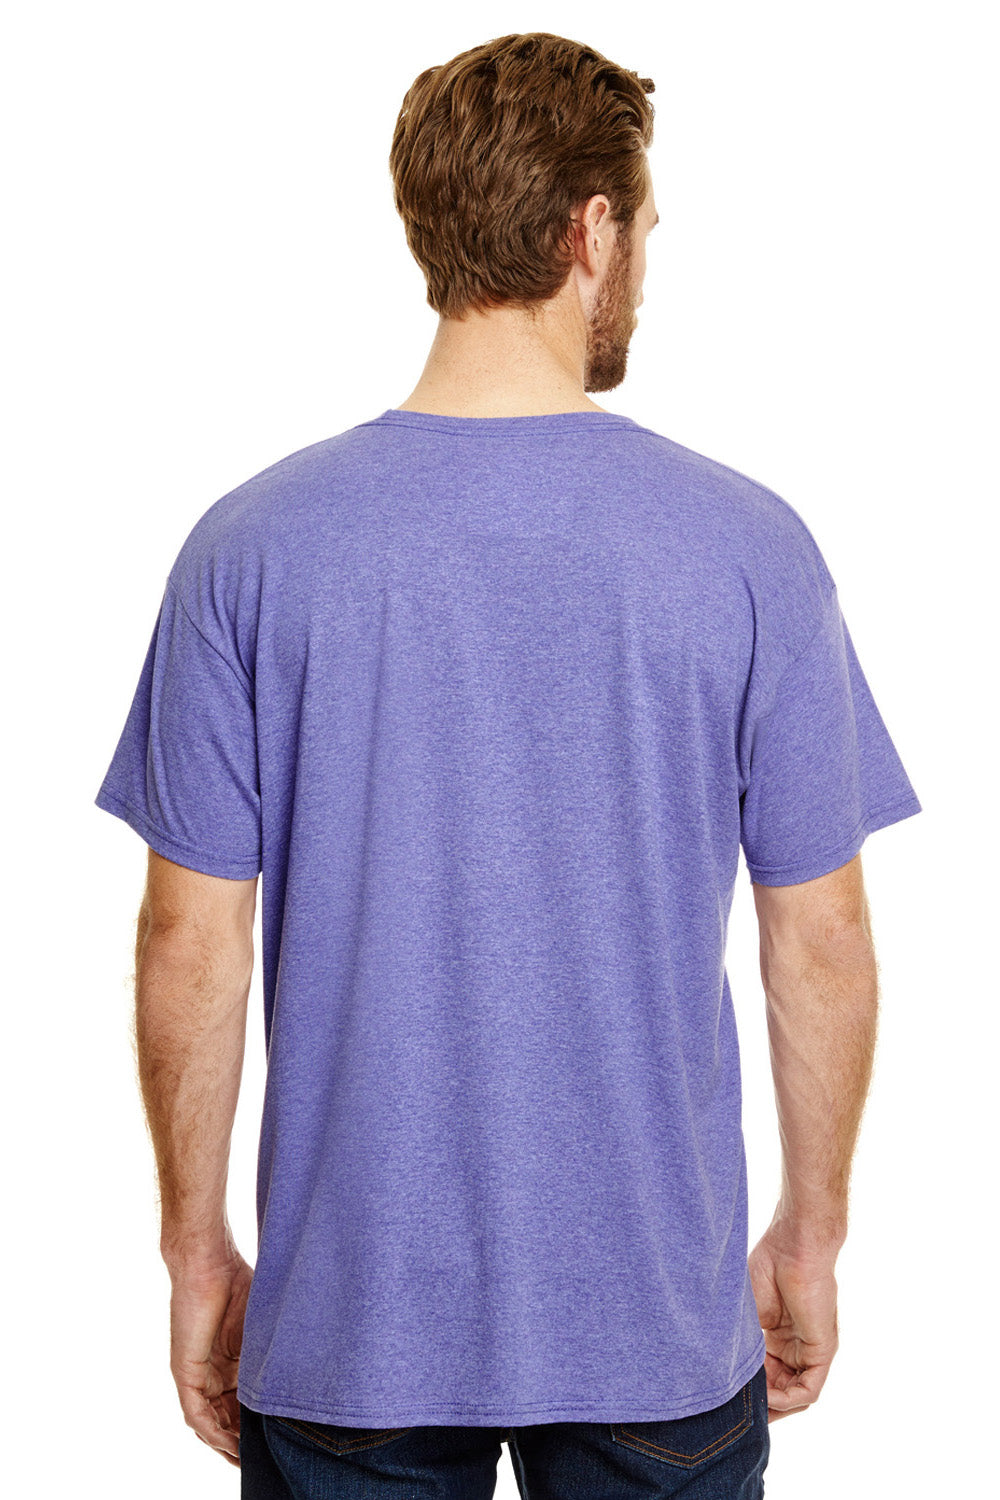 Hanes 42TB Mens X-Temp FreshIQ Moisture Wicking Short Sleeve Crewneck T-Shirt Grape Purple Back